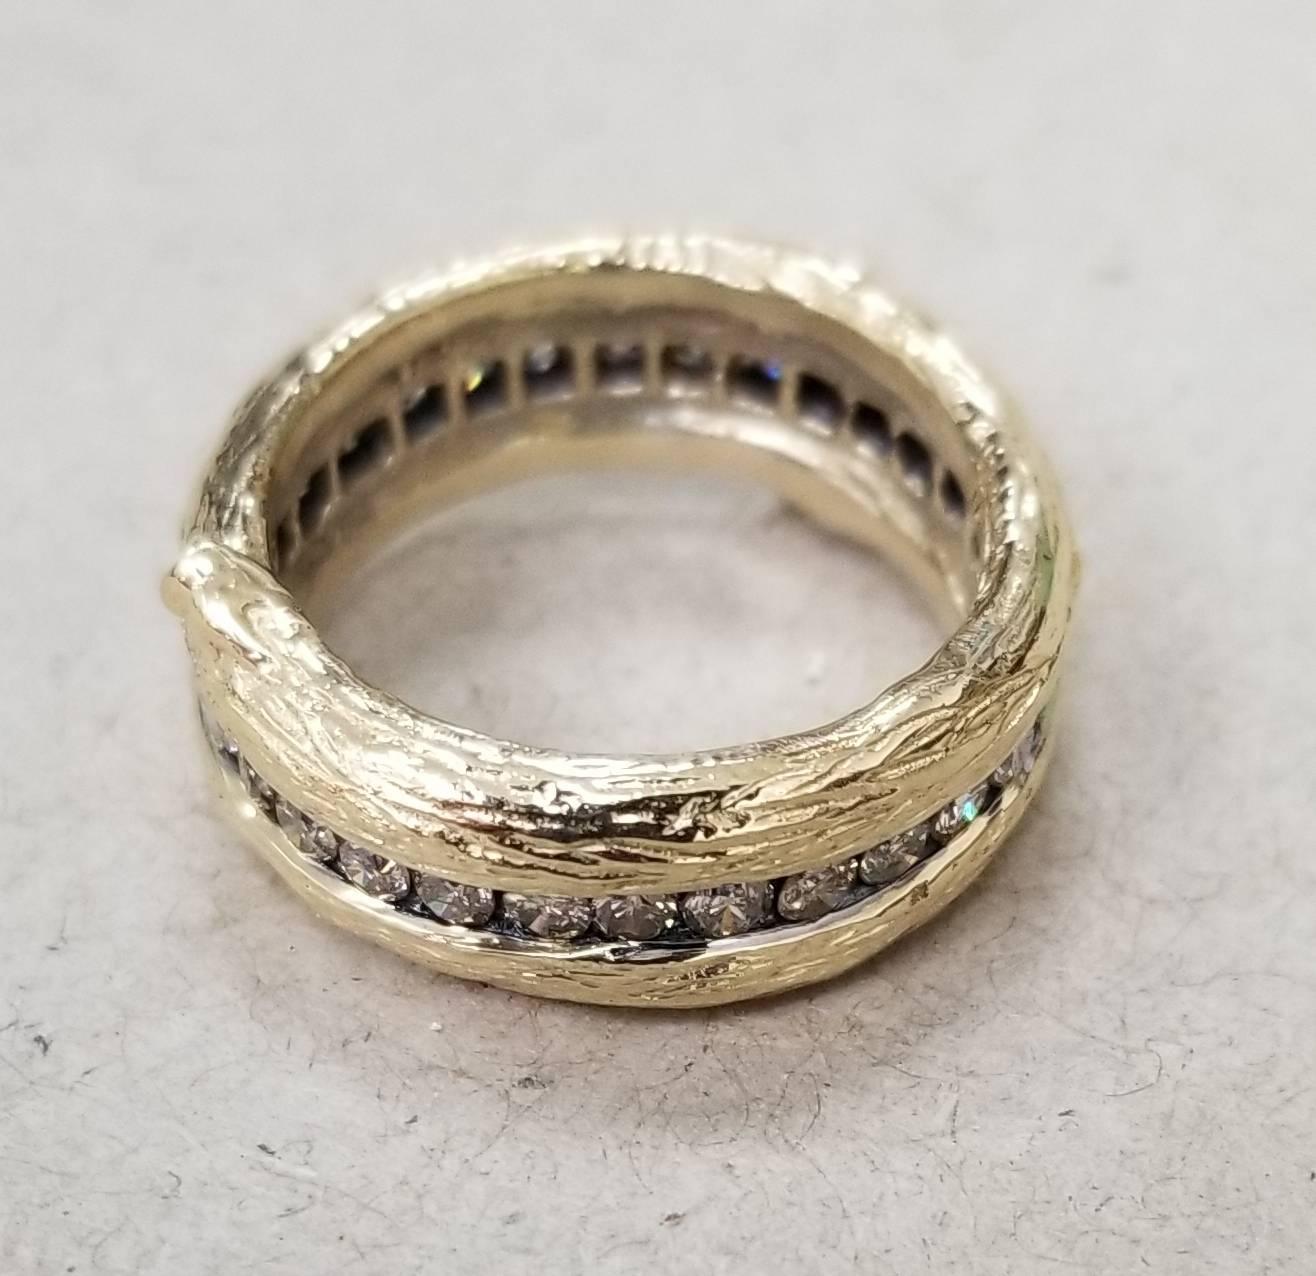 0.15 carat diamond ring